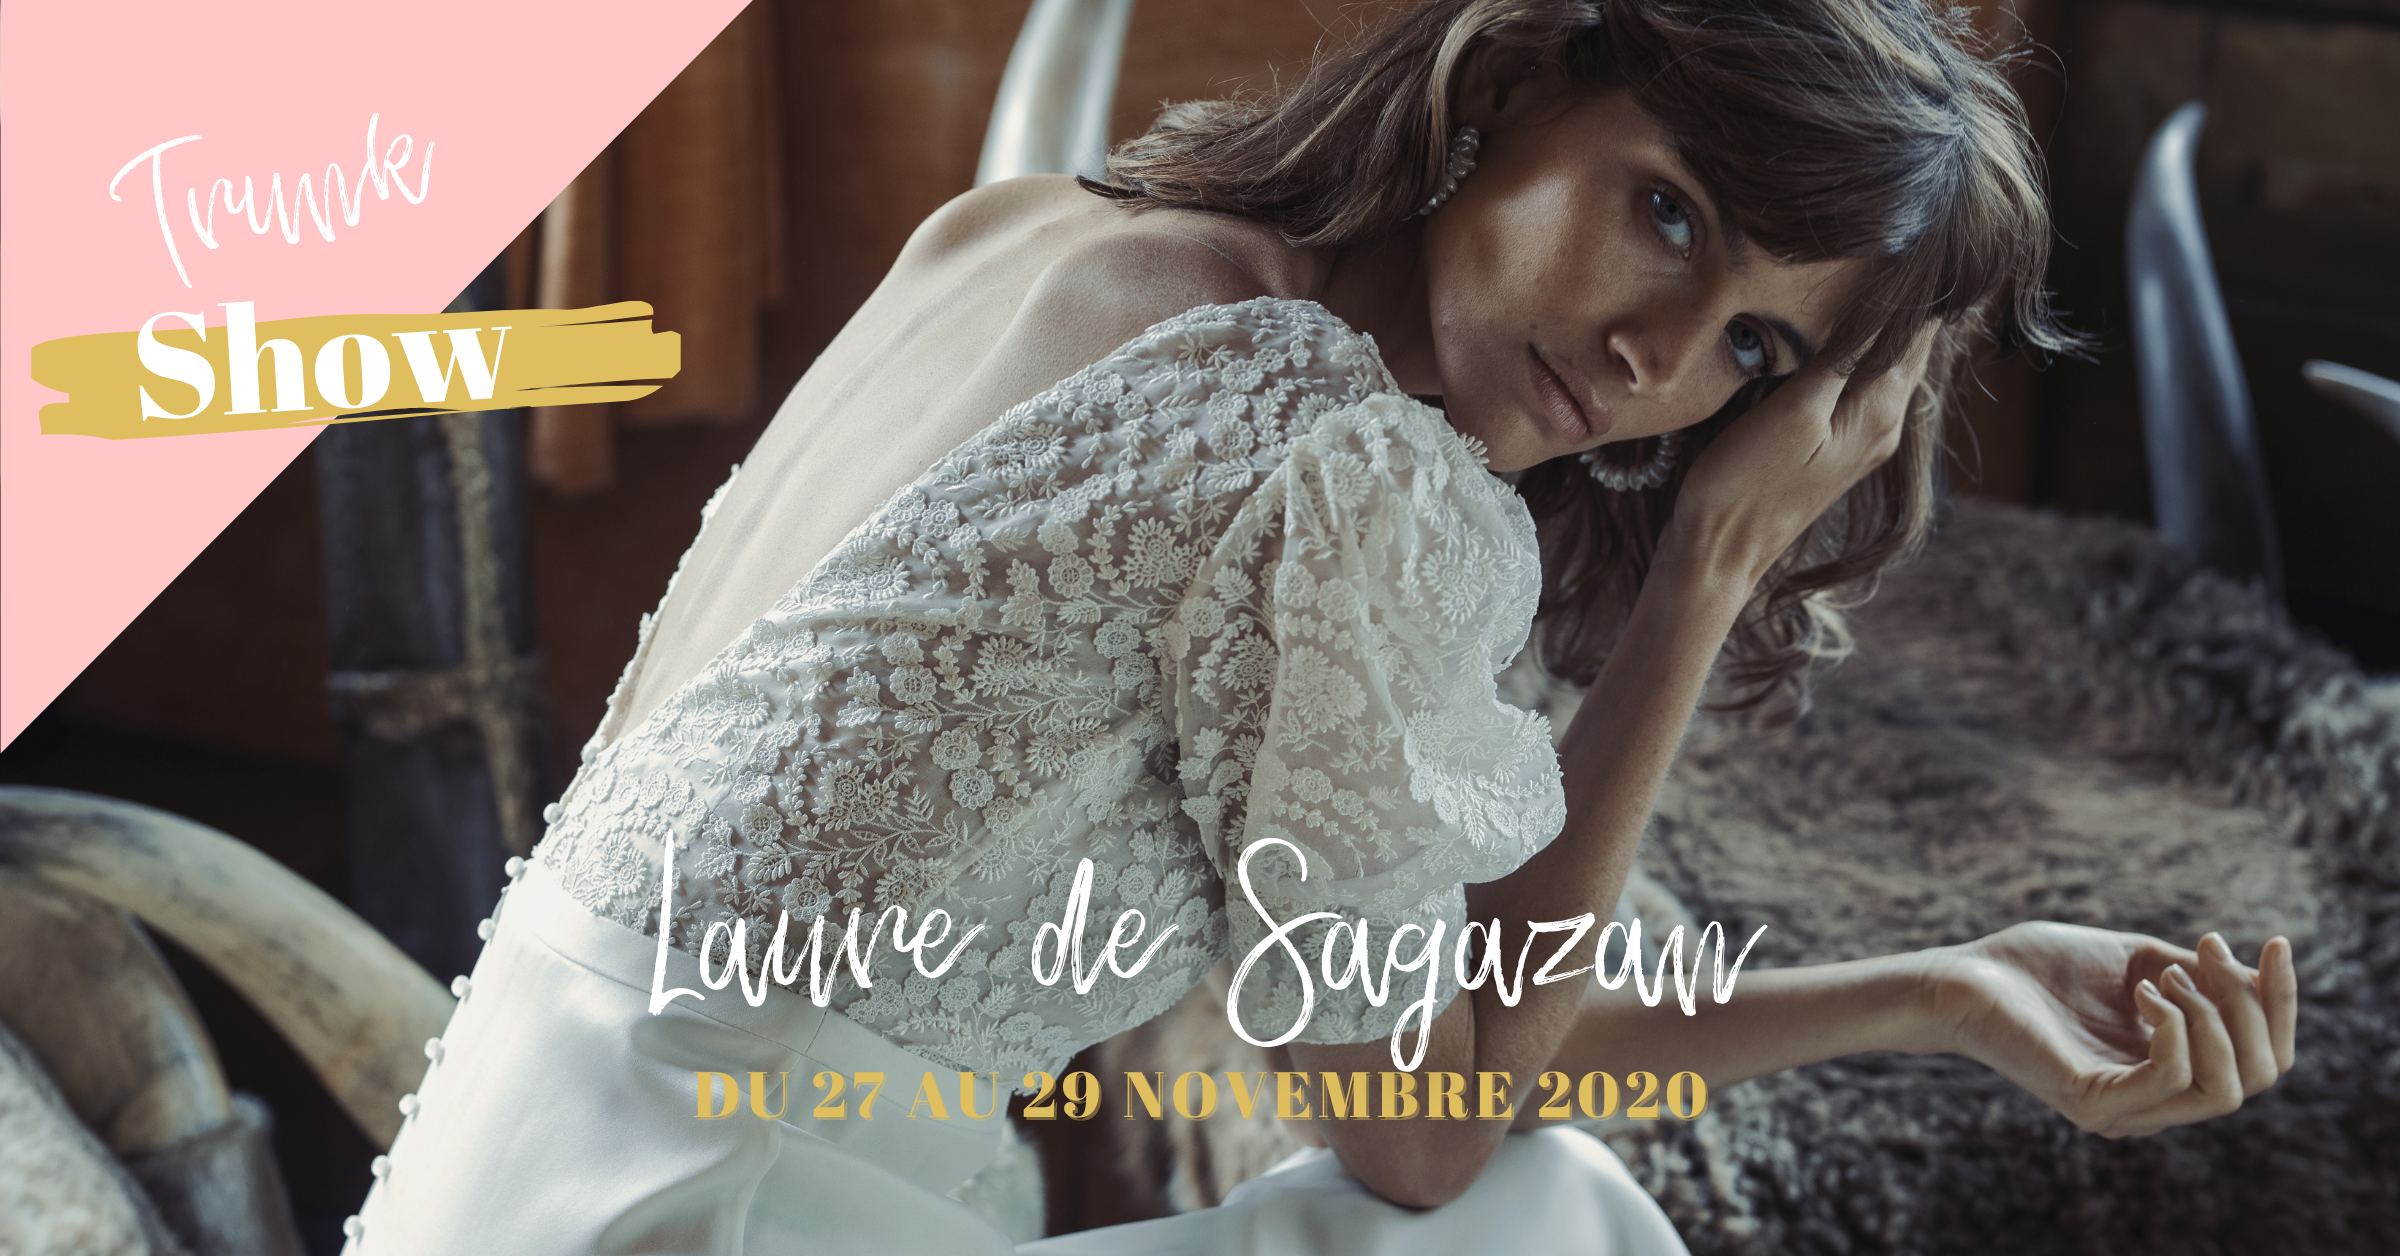 Laure de Sagazan from 27th to 29th November 2020